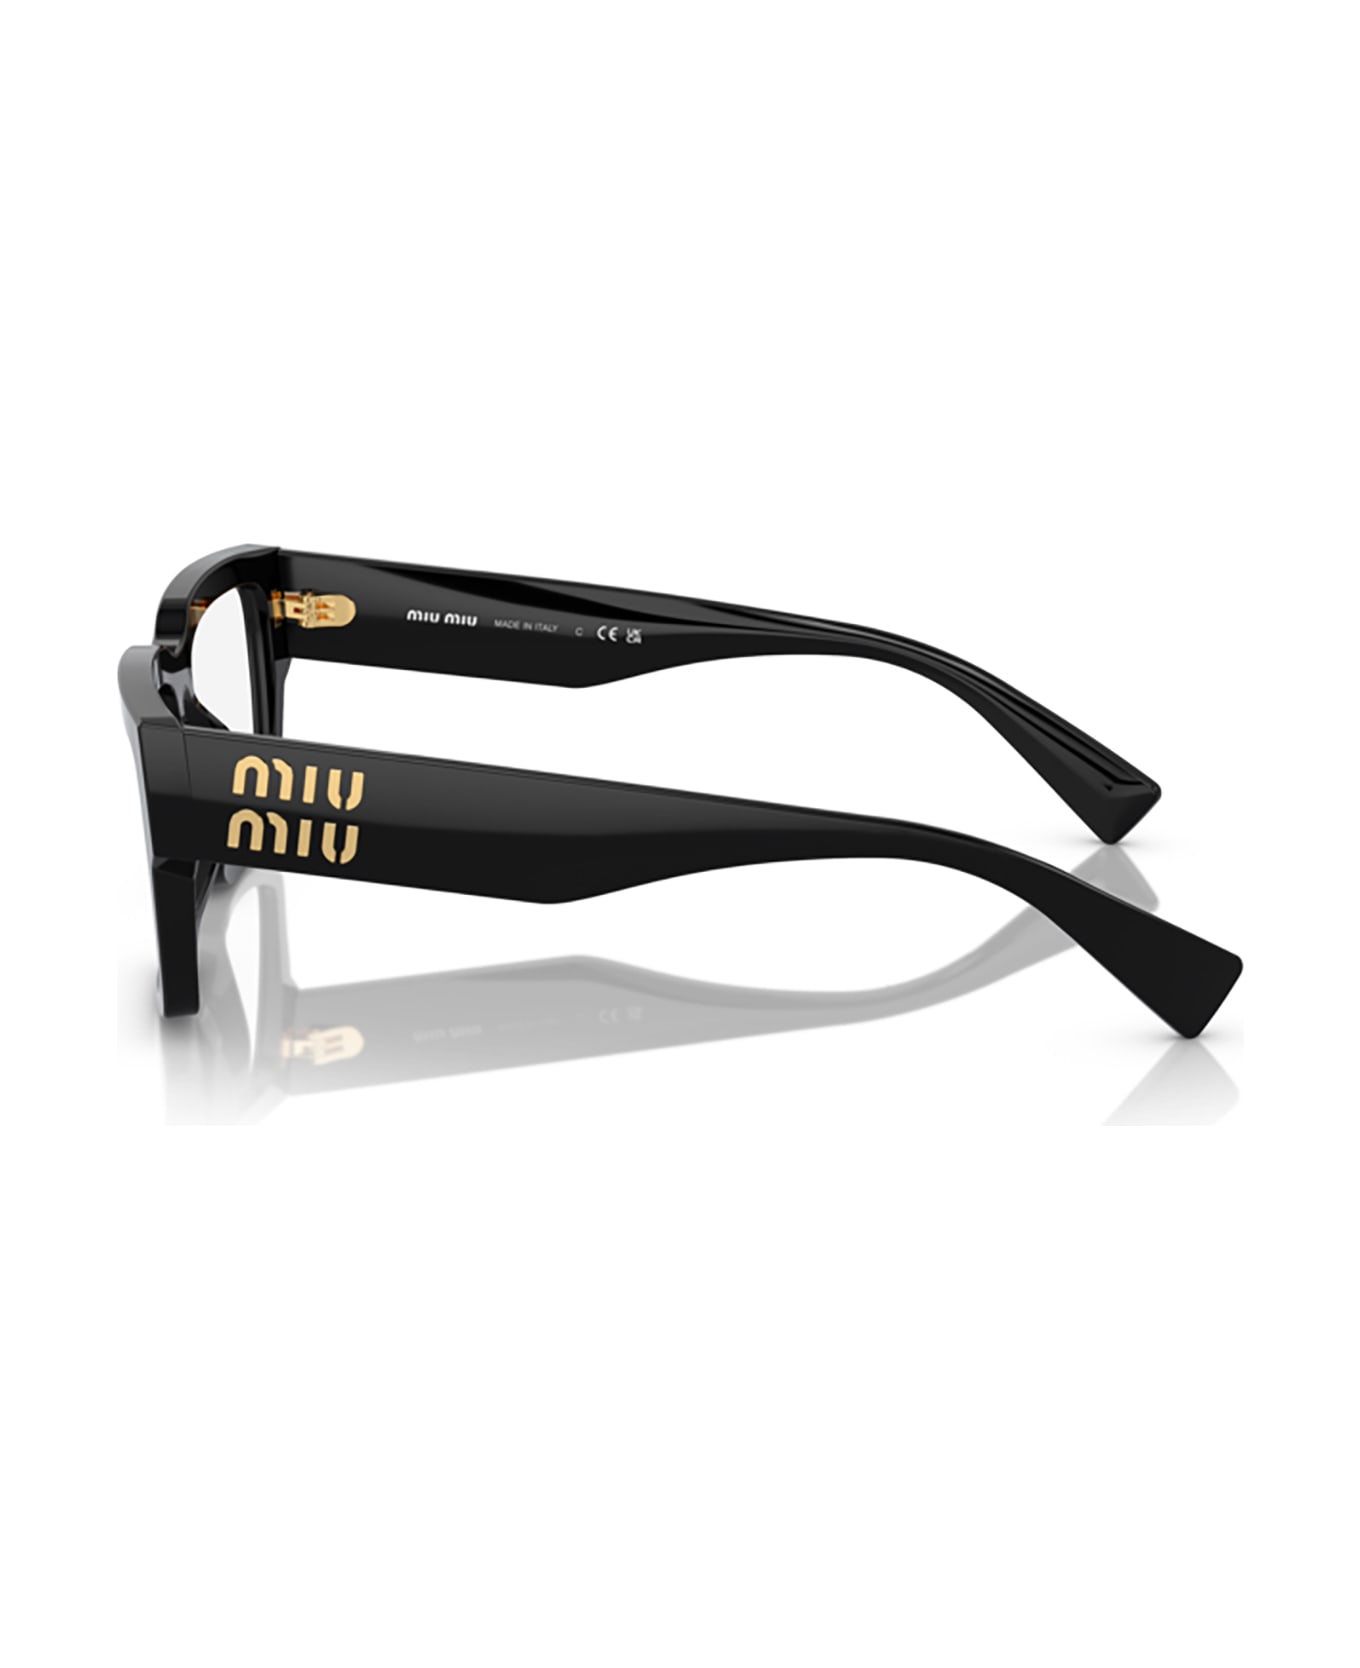 Miu Miu Eyewear Mu 02xv Black Glasses - Black